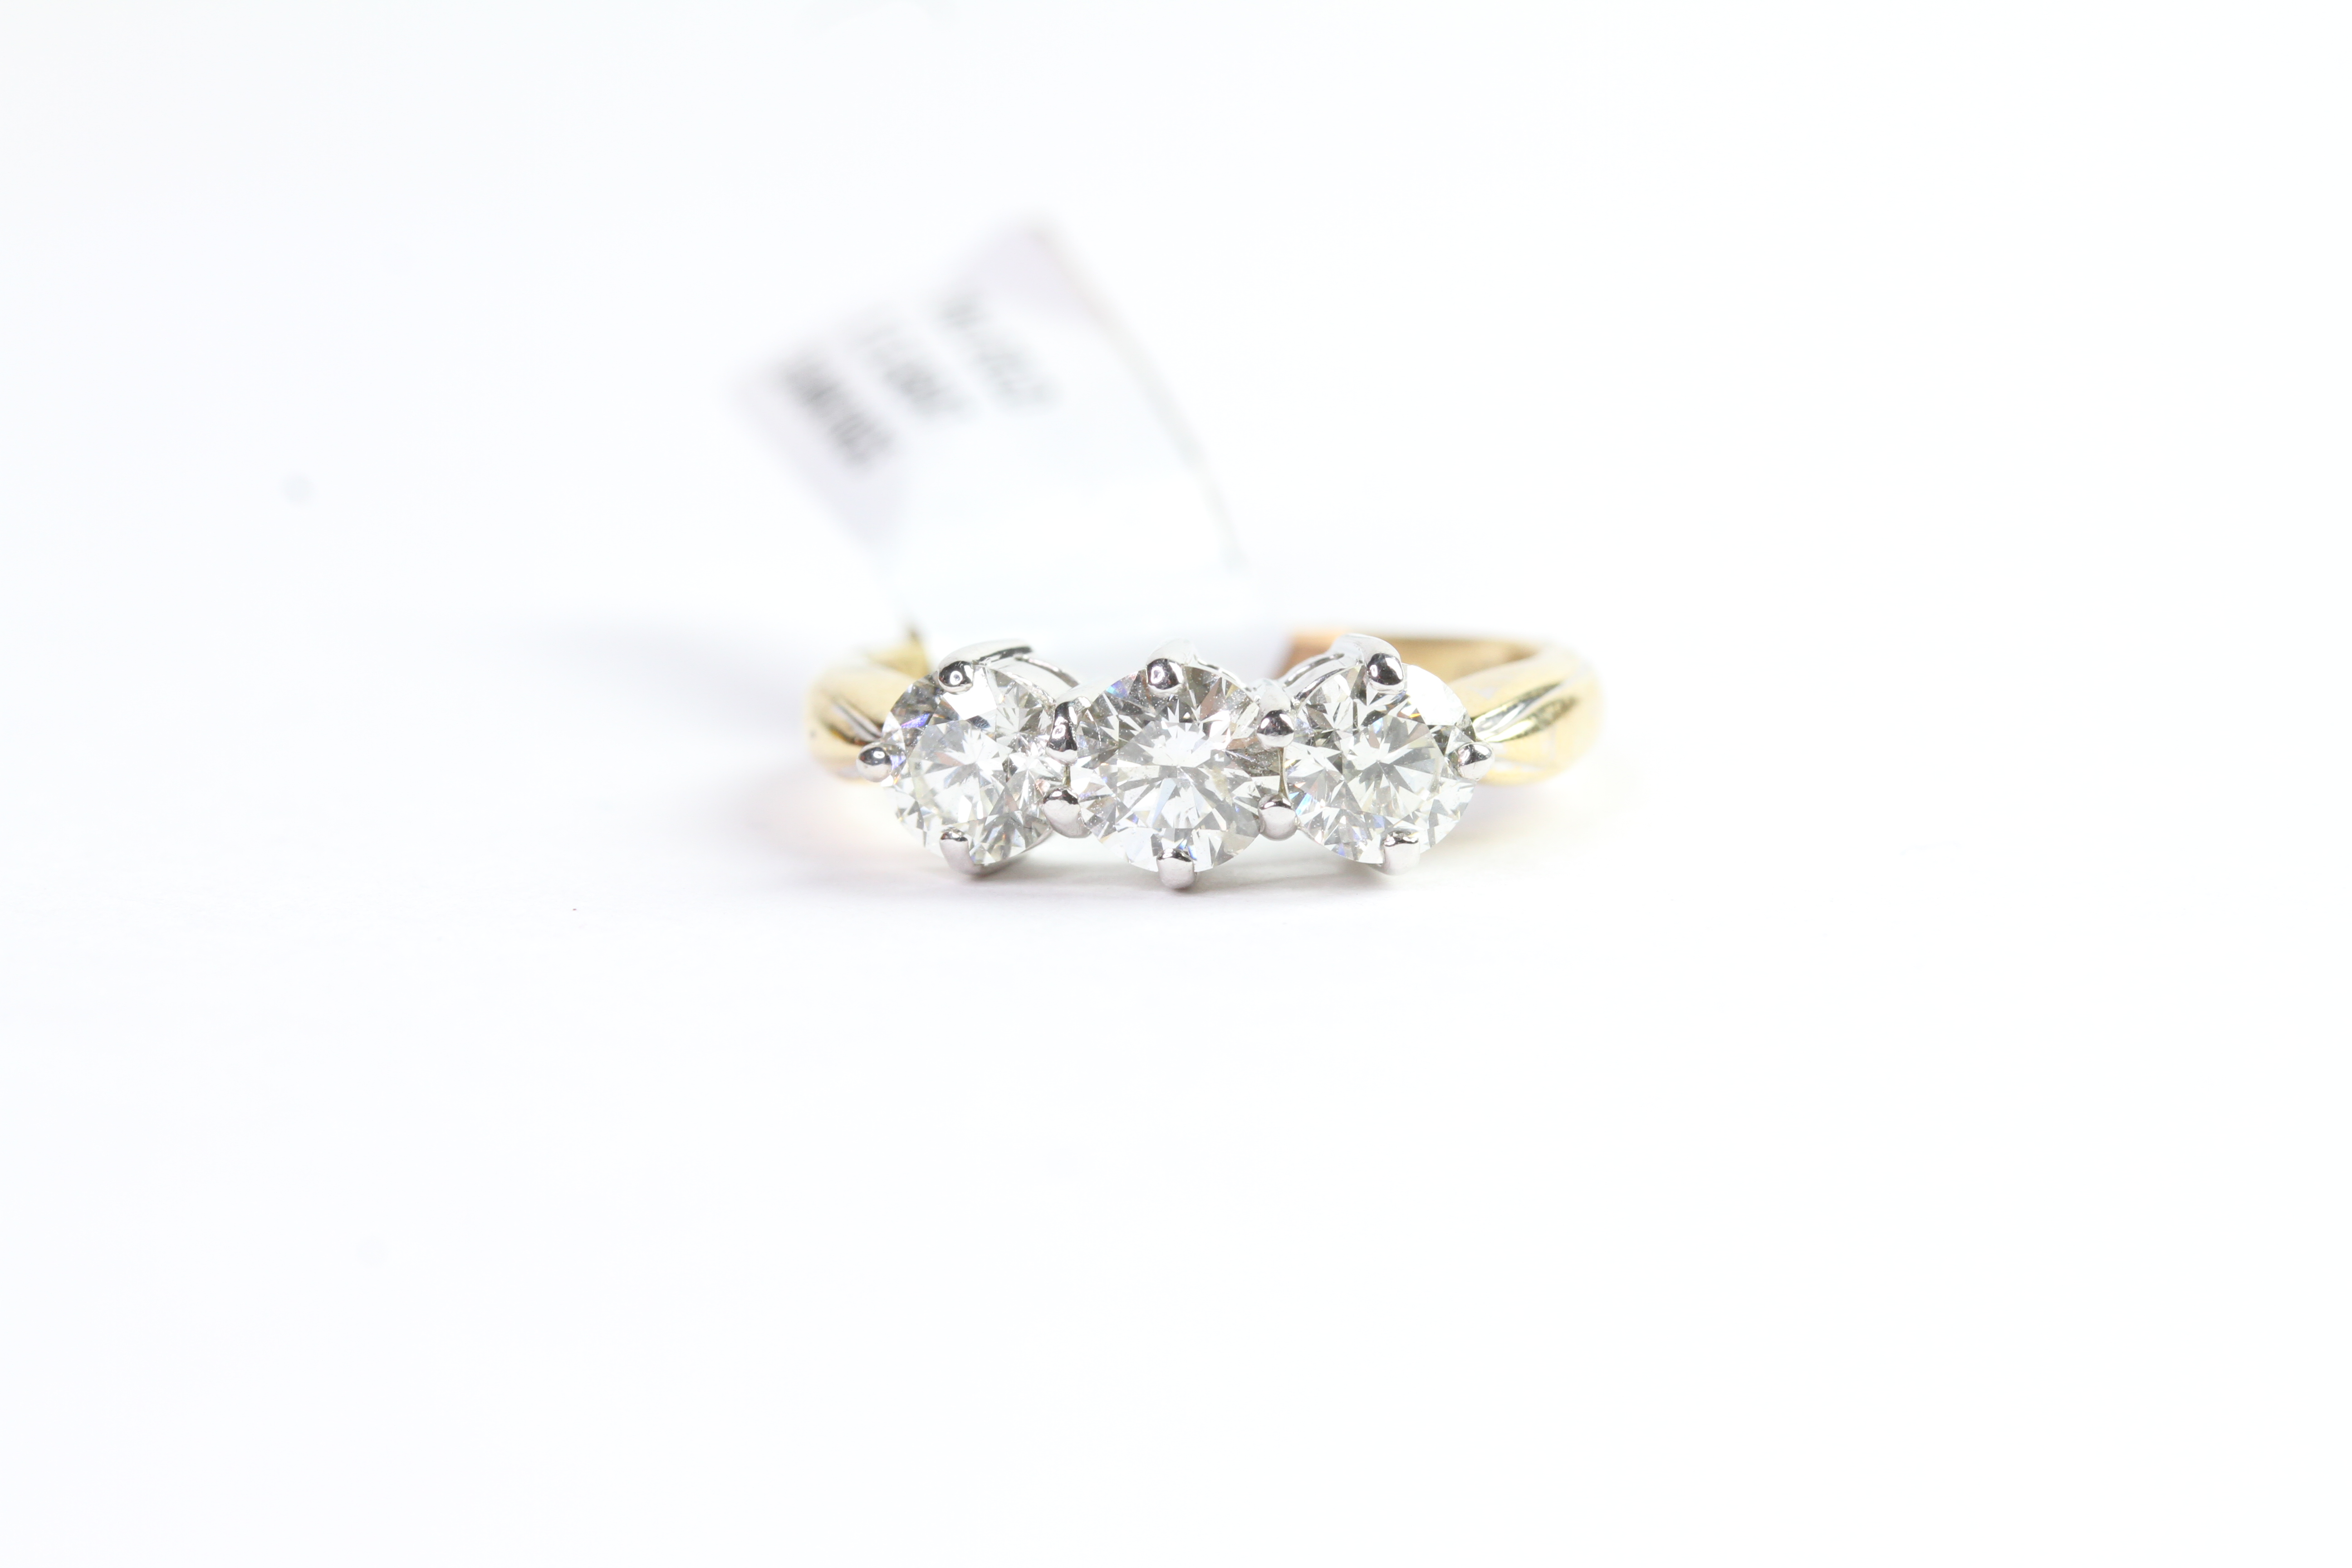 1.33ct Three Stone Diamond Ring, three brilliant cut diamonds estimated 0.42/0.49/0.42ct, tested